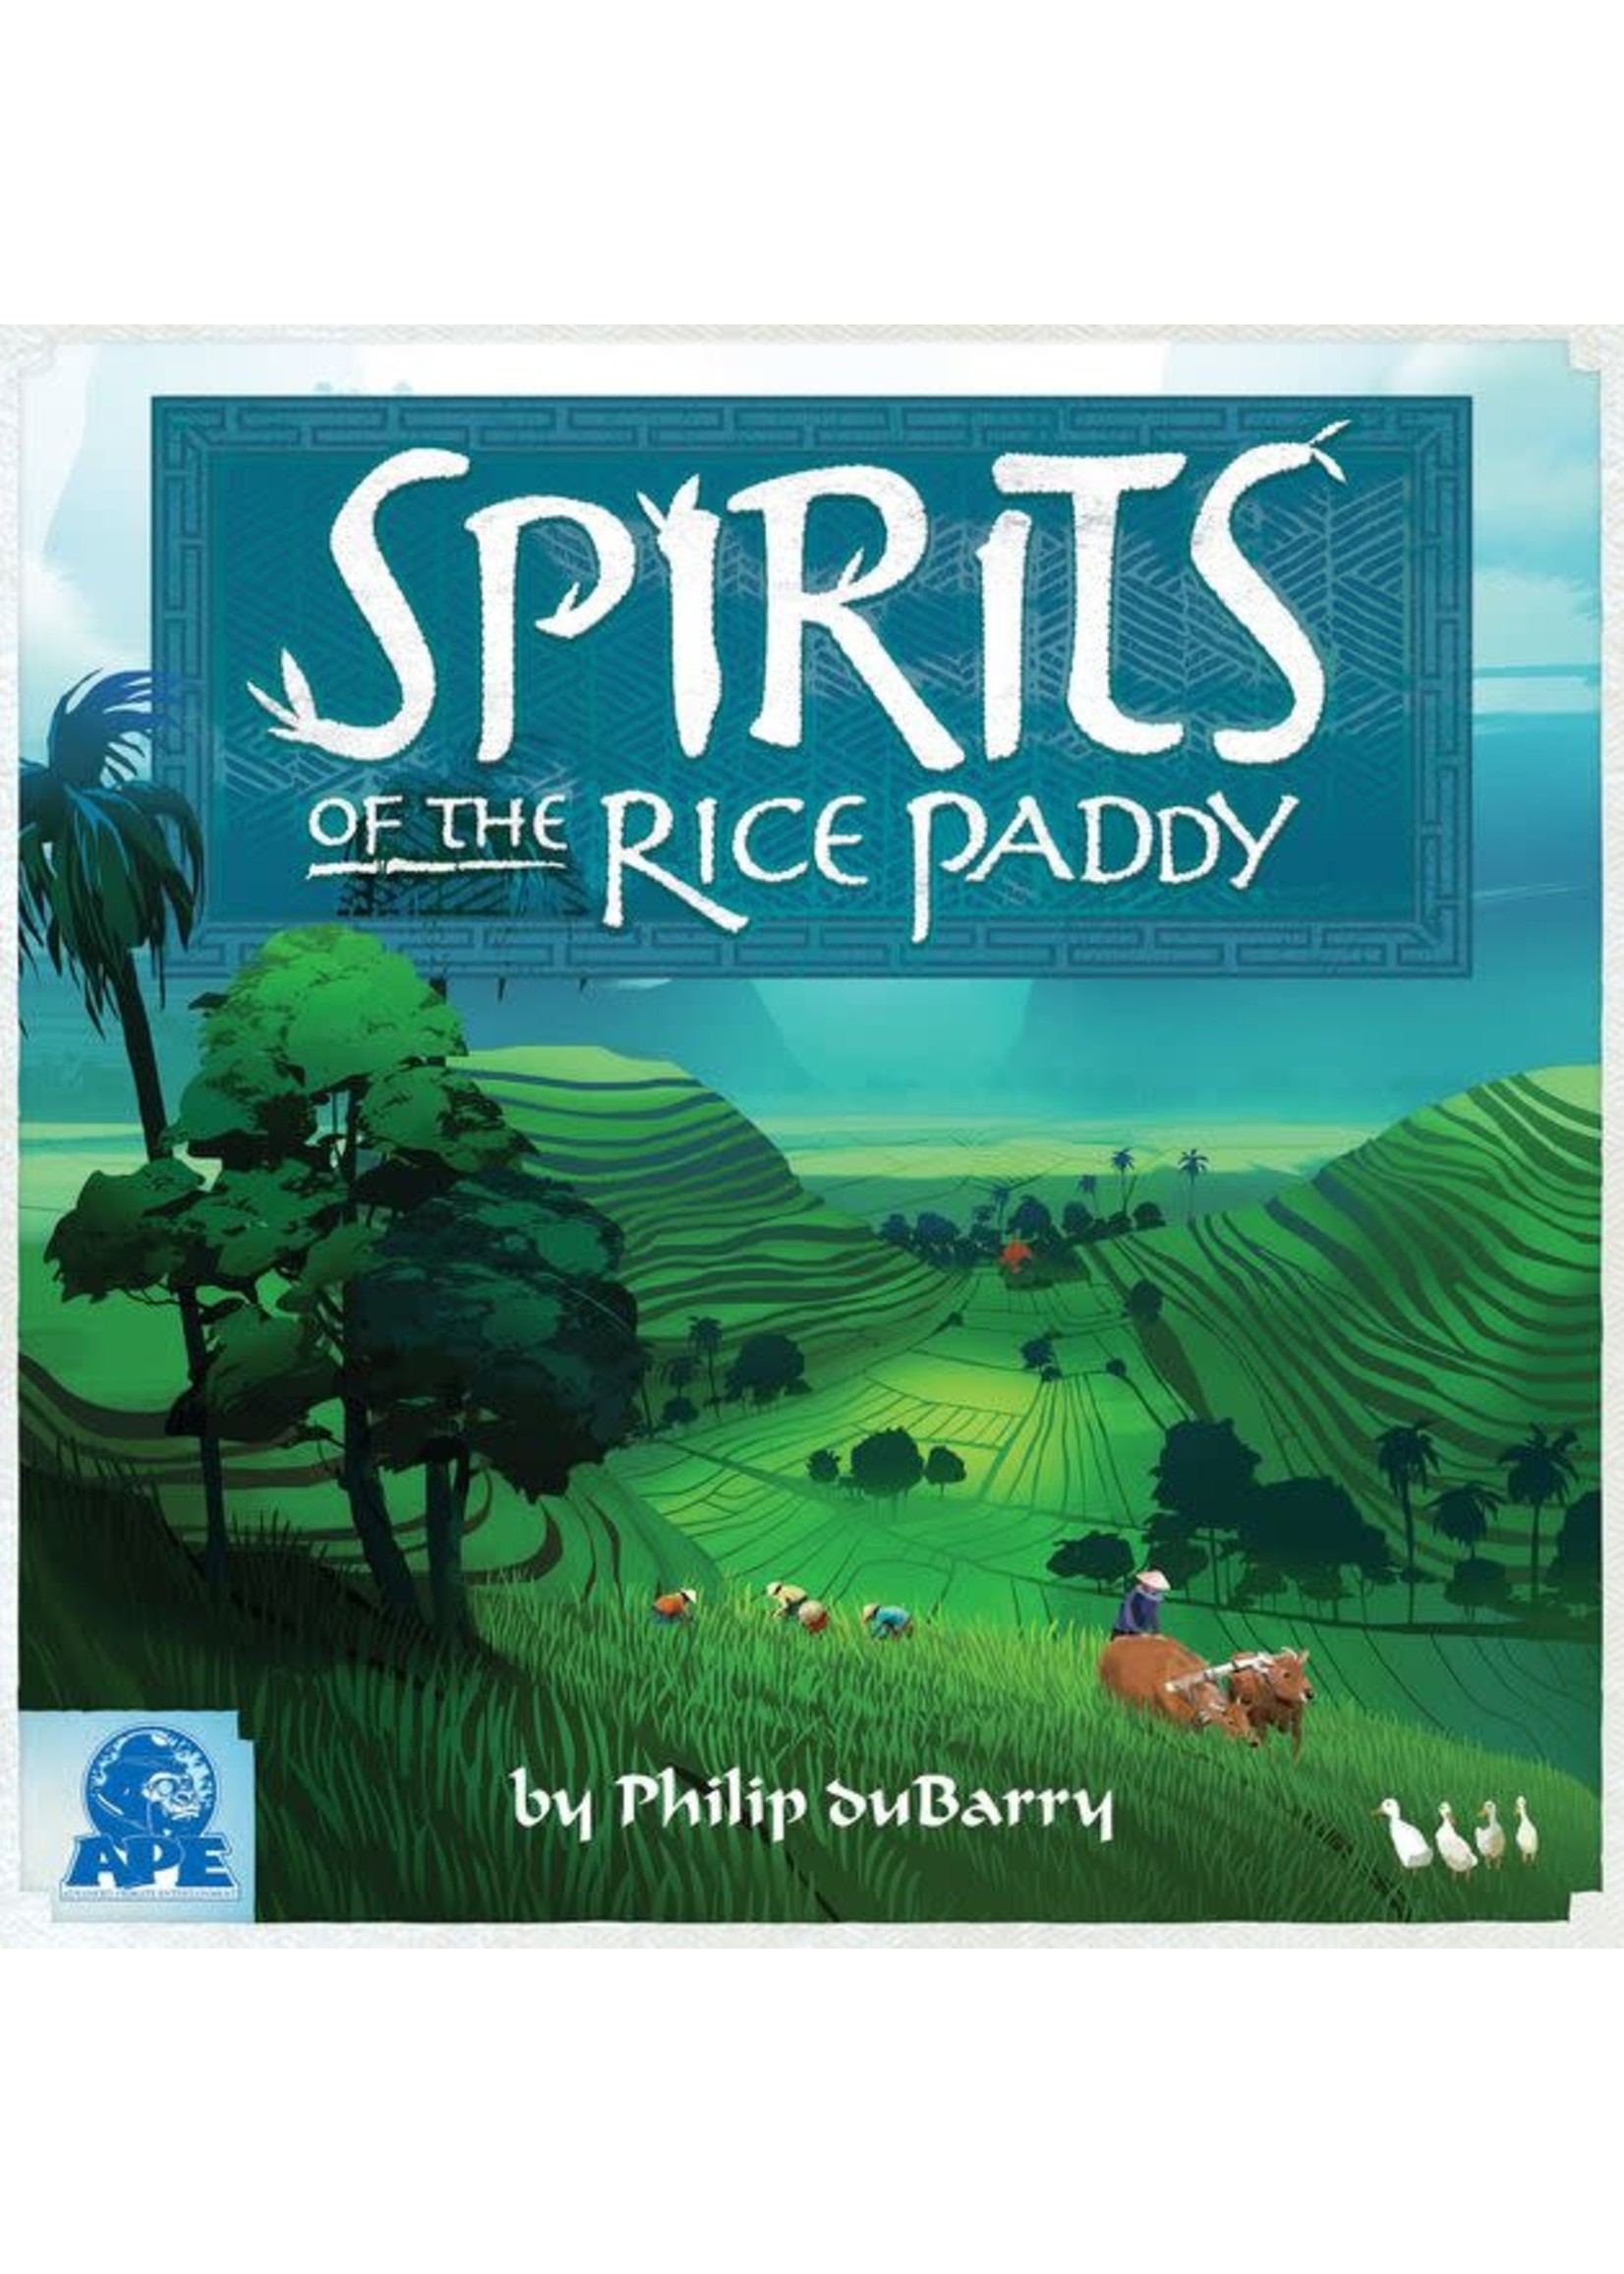 Rental RENTAL - Spirits of the Rice Paddy 3 Lb 7.3 oz